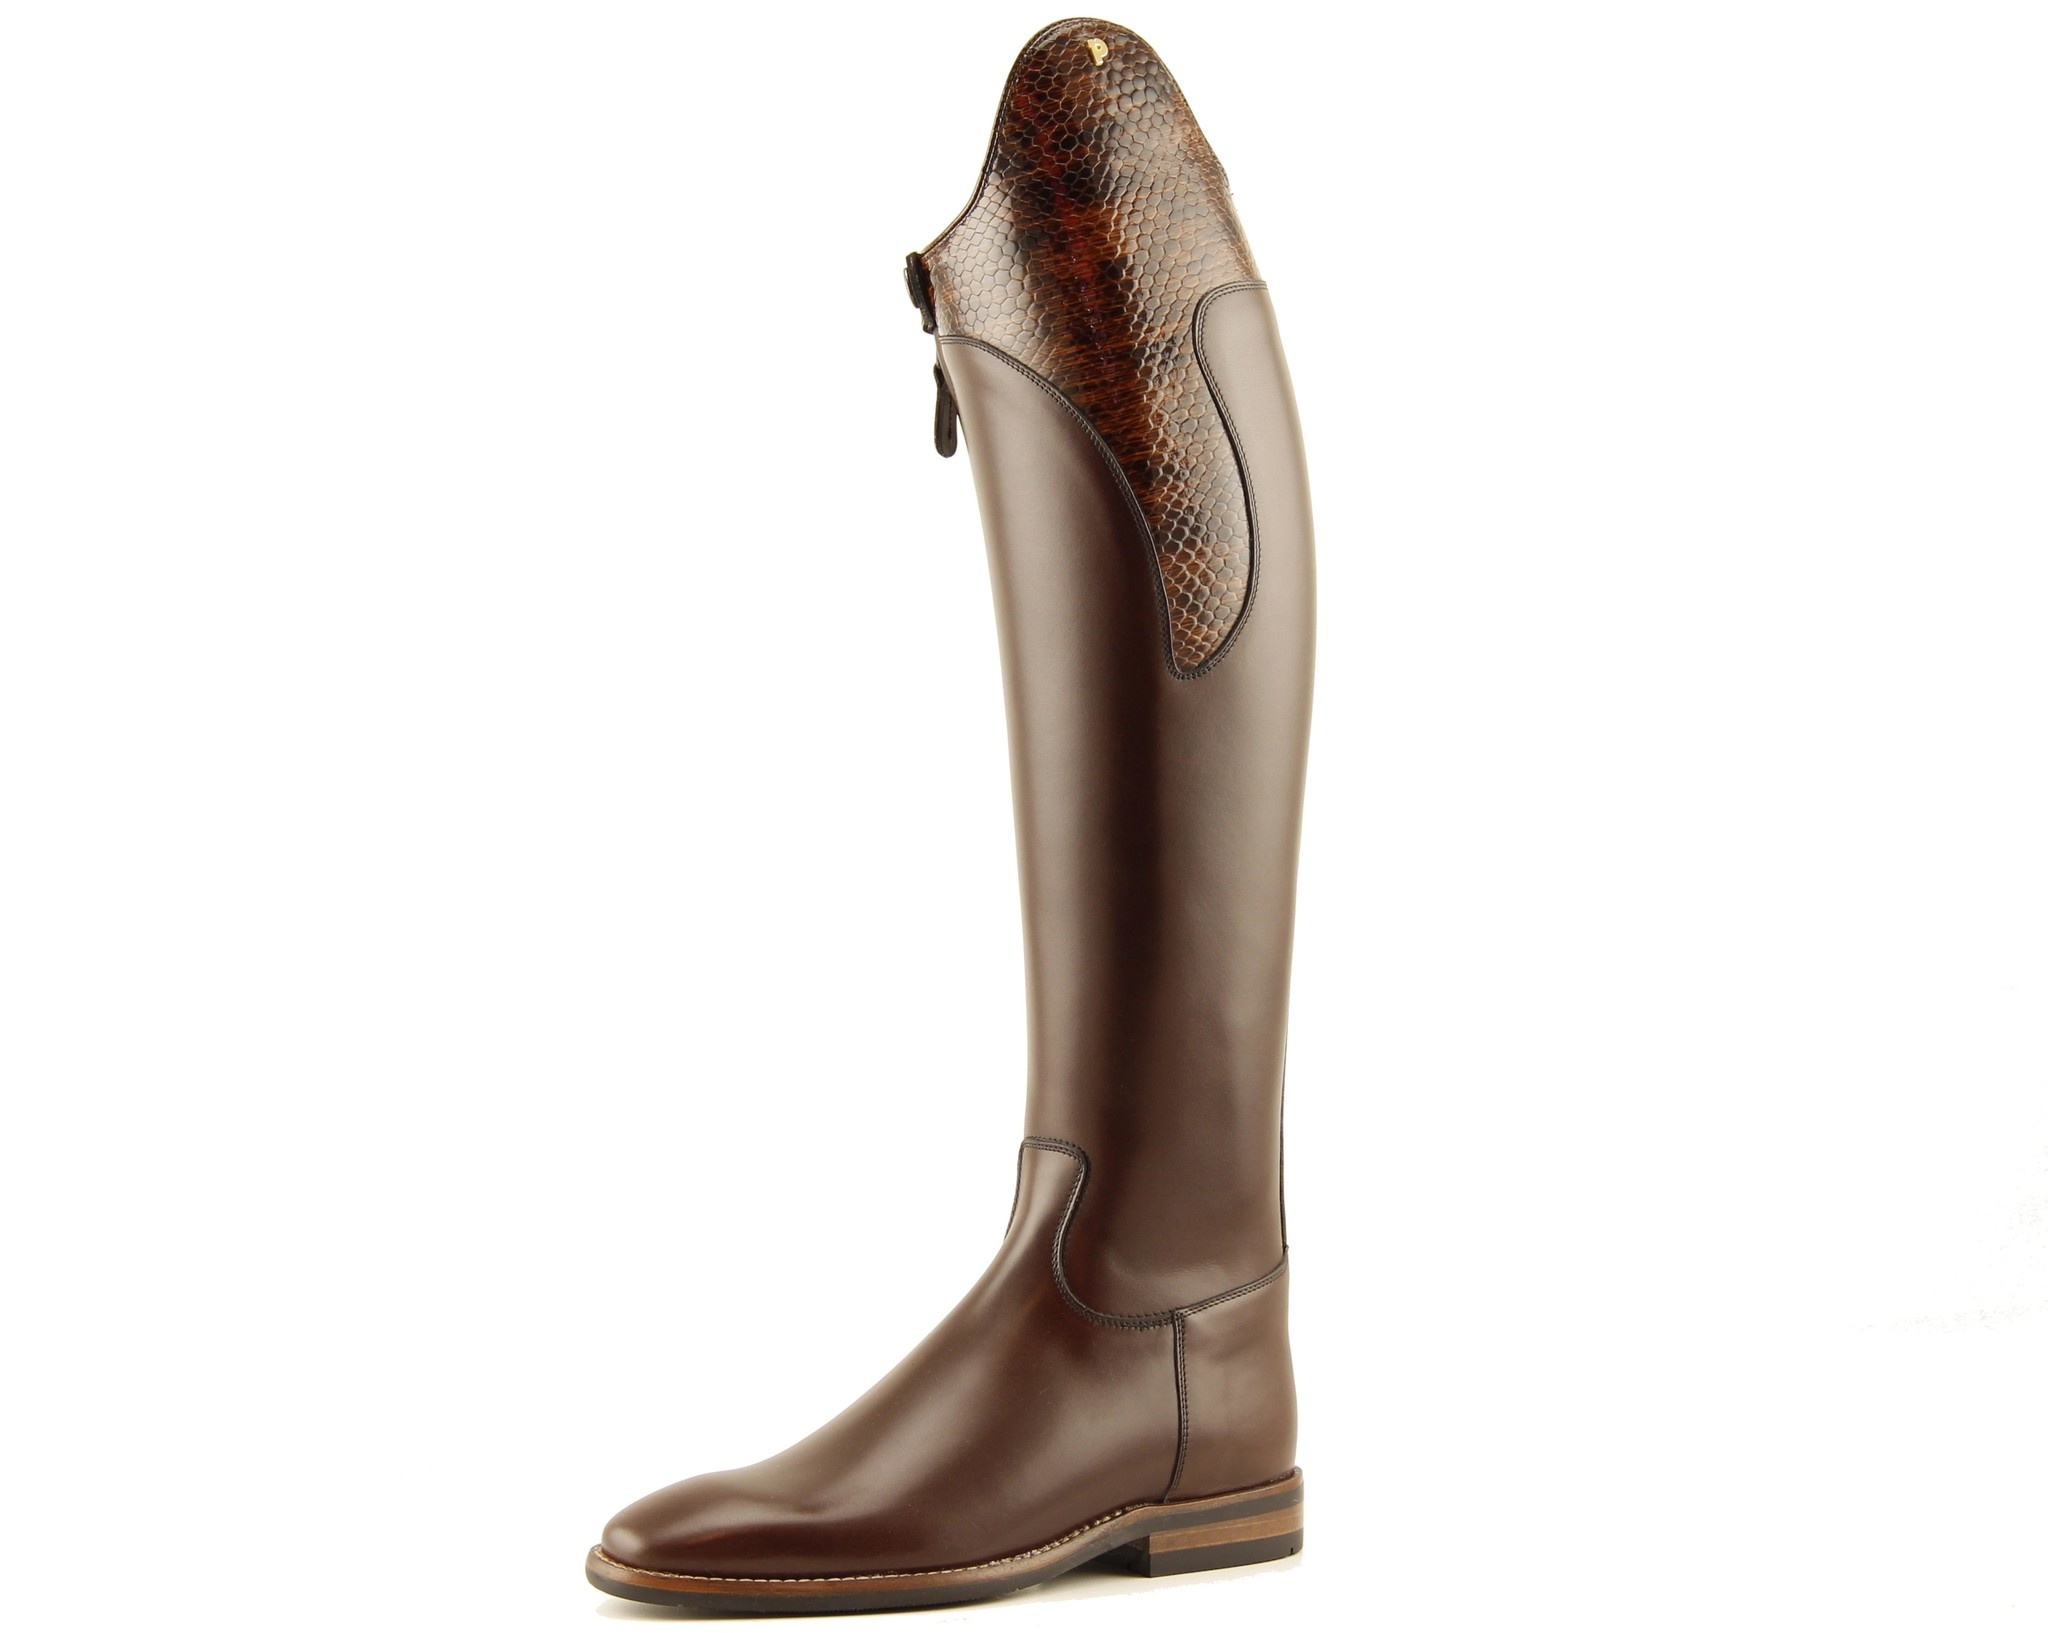 Petrie Sublime CYB dressage in calf leather - Van Huet Riding boots